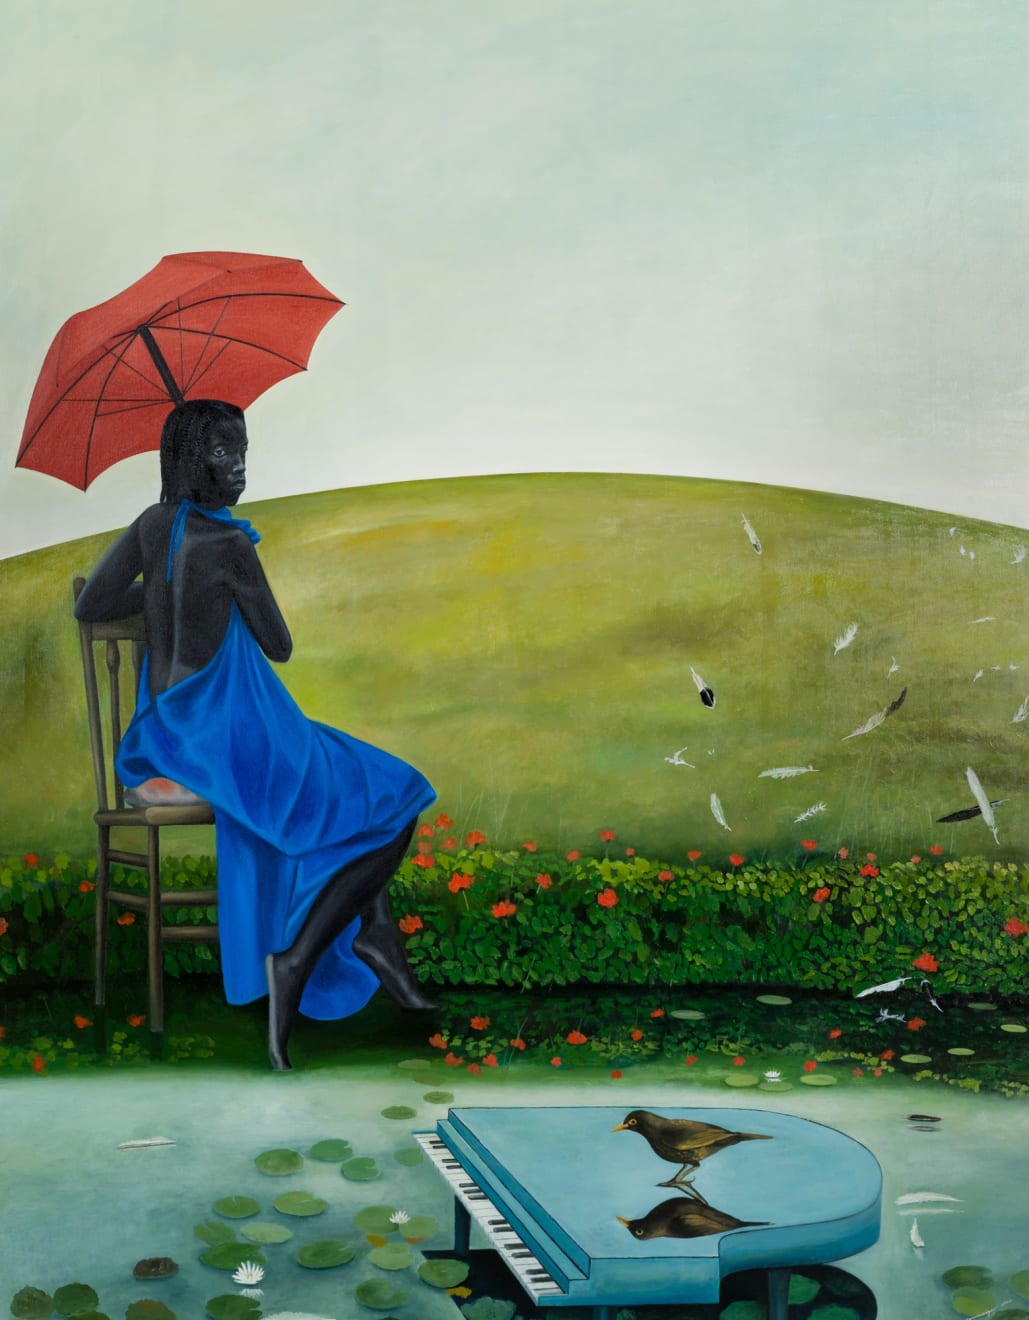 Ian Mwesiga, Lady with an umbrella, 2022